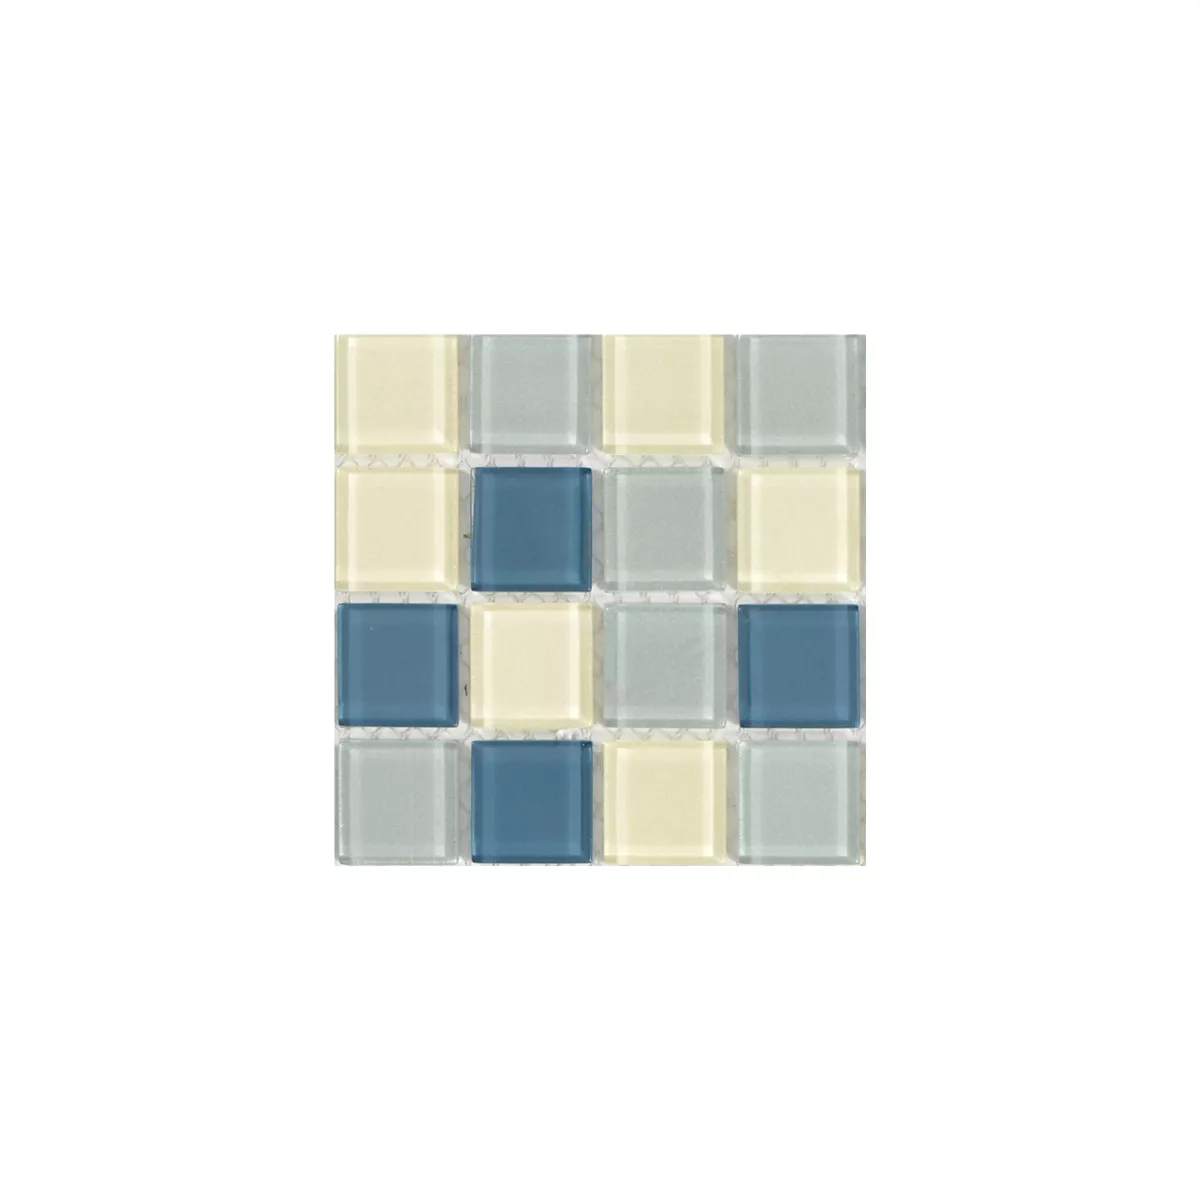 Vzorek Skleněná Mozaika Dlaždice Bommel Stříbrná Bílá Modrá